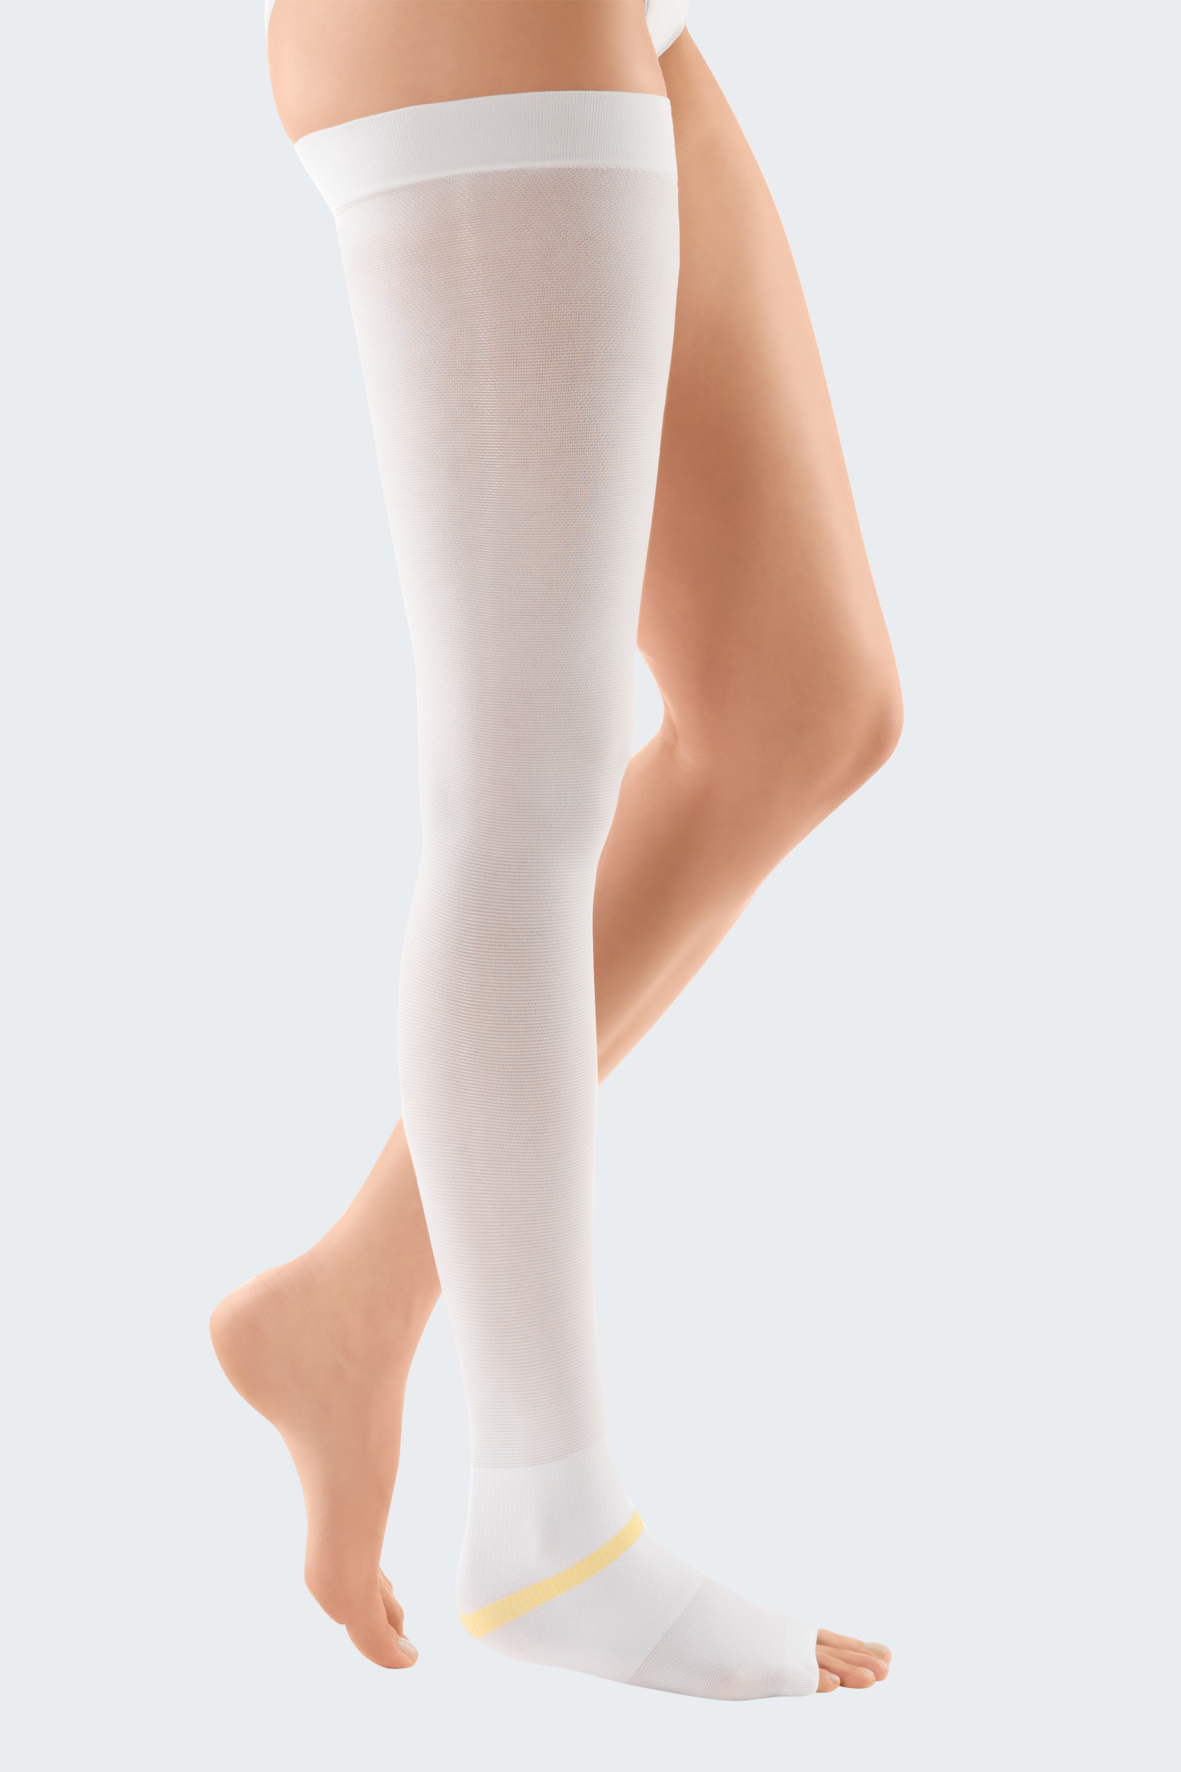 Circaid Juxtafit Essentials Leg, upper leg with knee, lower leg